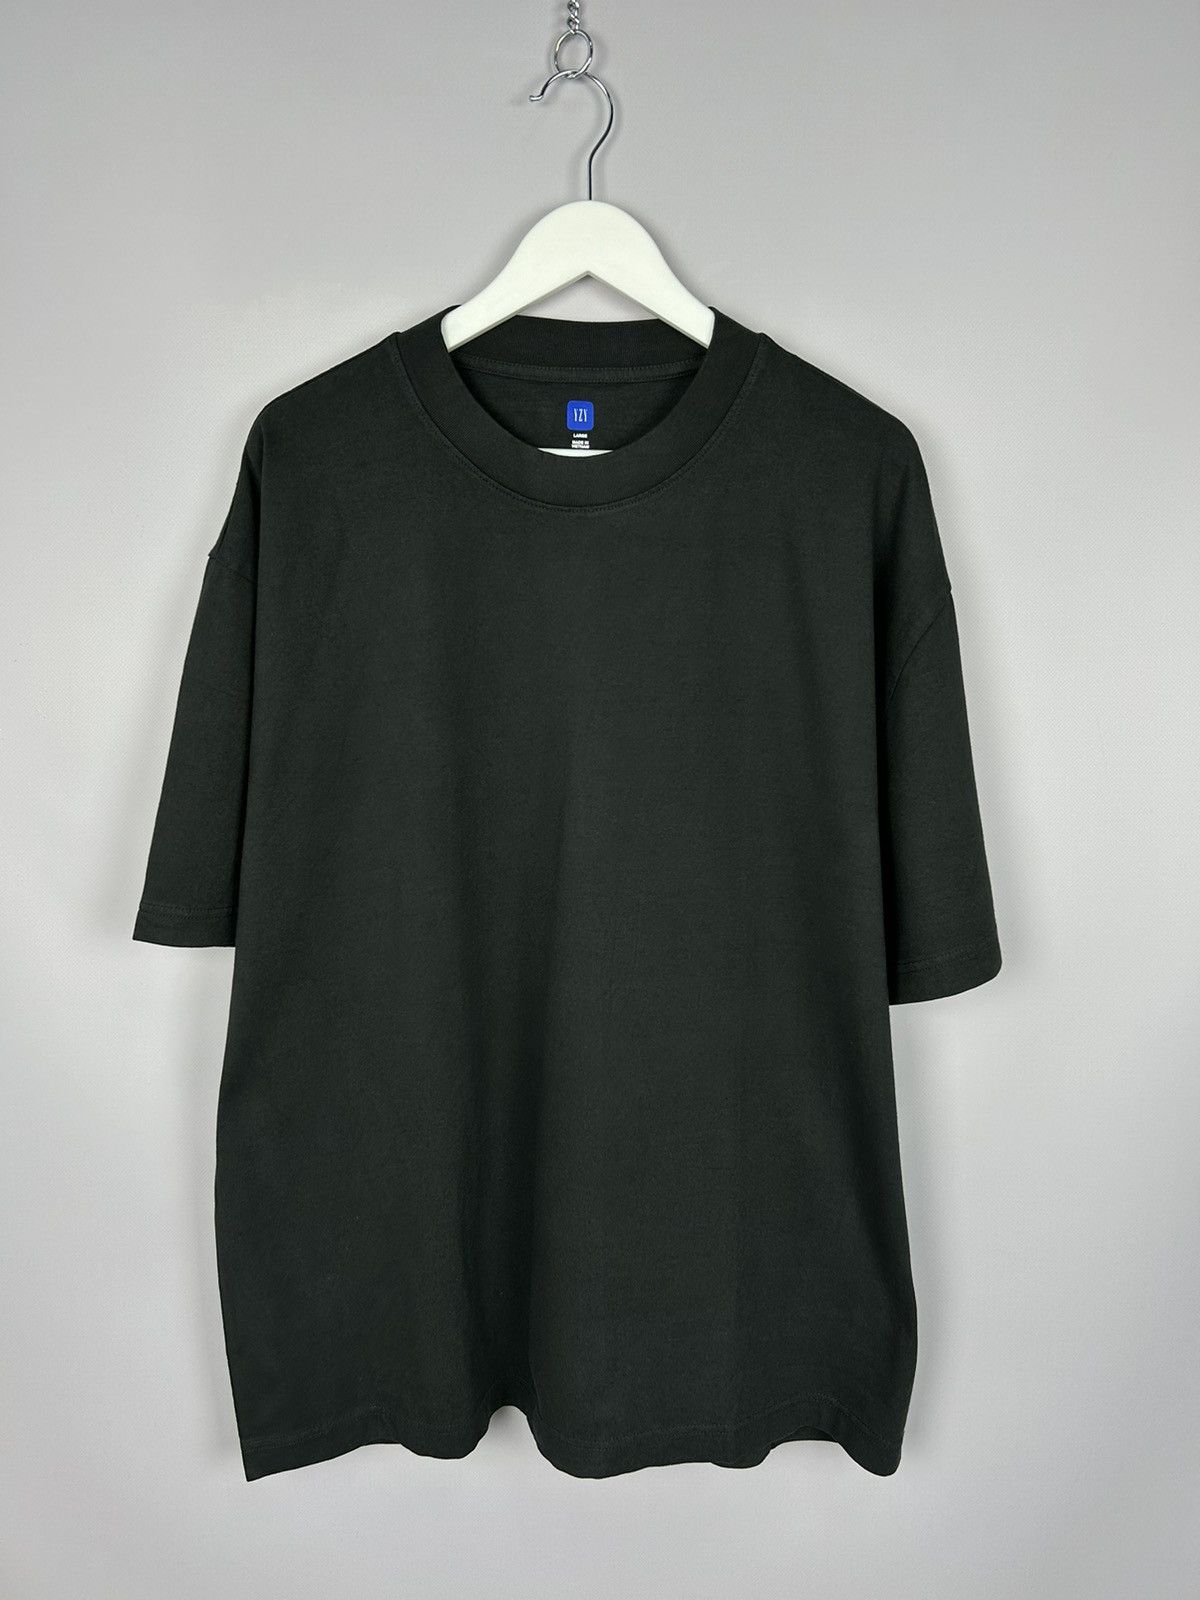 Yeezy Gap T Shirt | Grailed